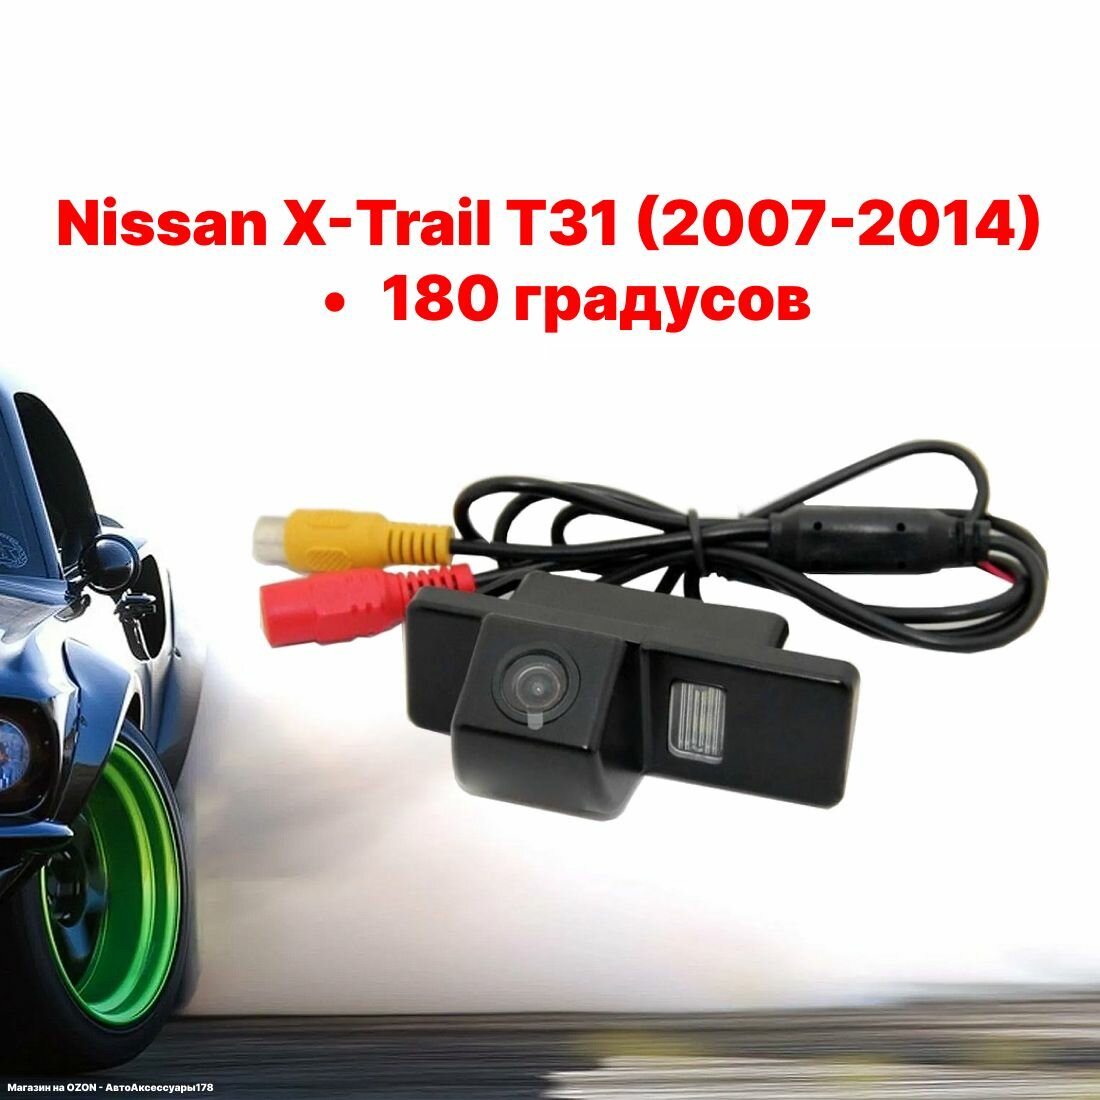 Камера заднего вида Ниссан X-Trail T31 (180 градусов) Nissan X-Trail T31